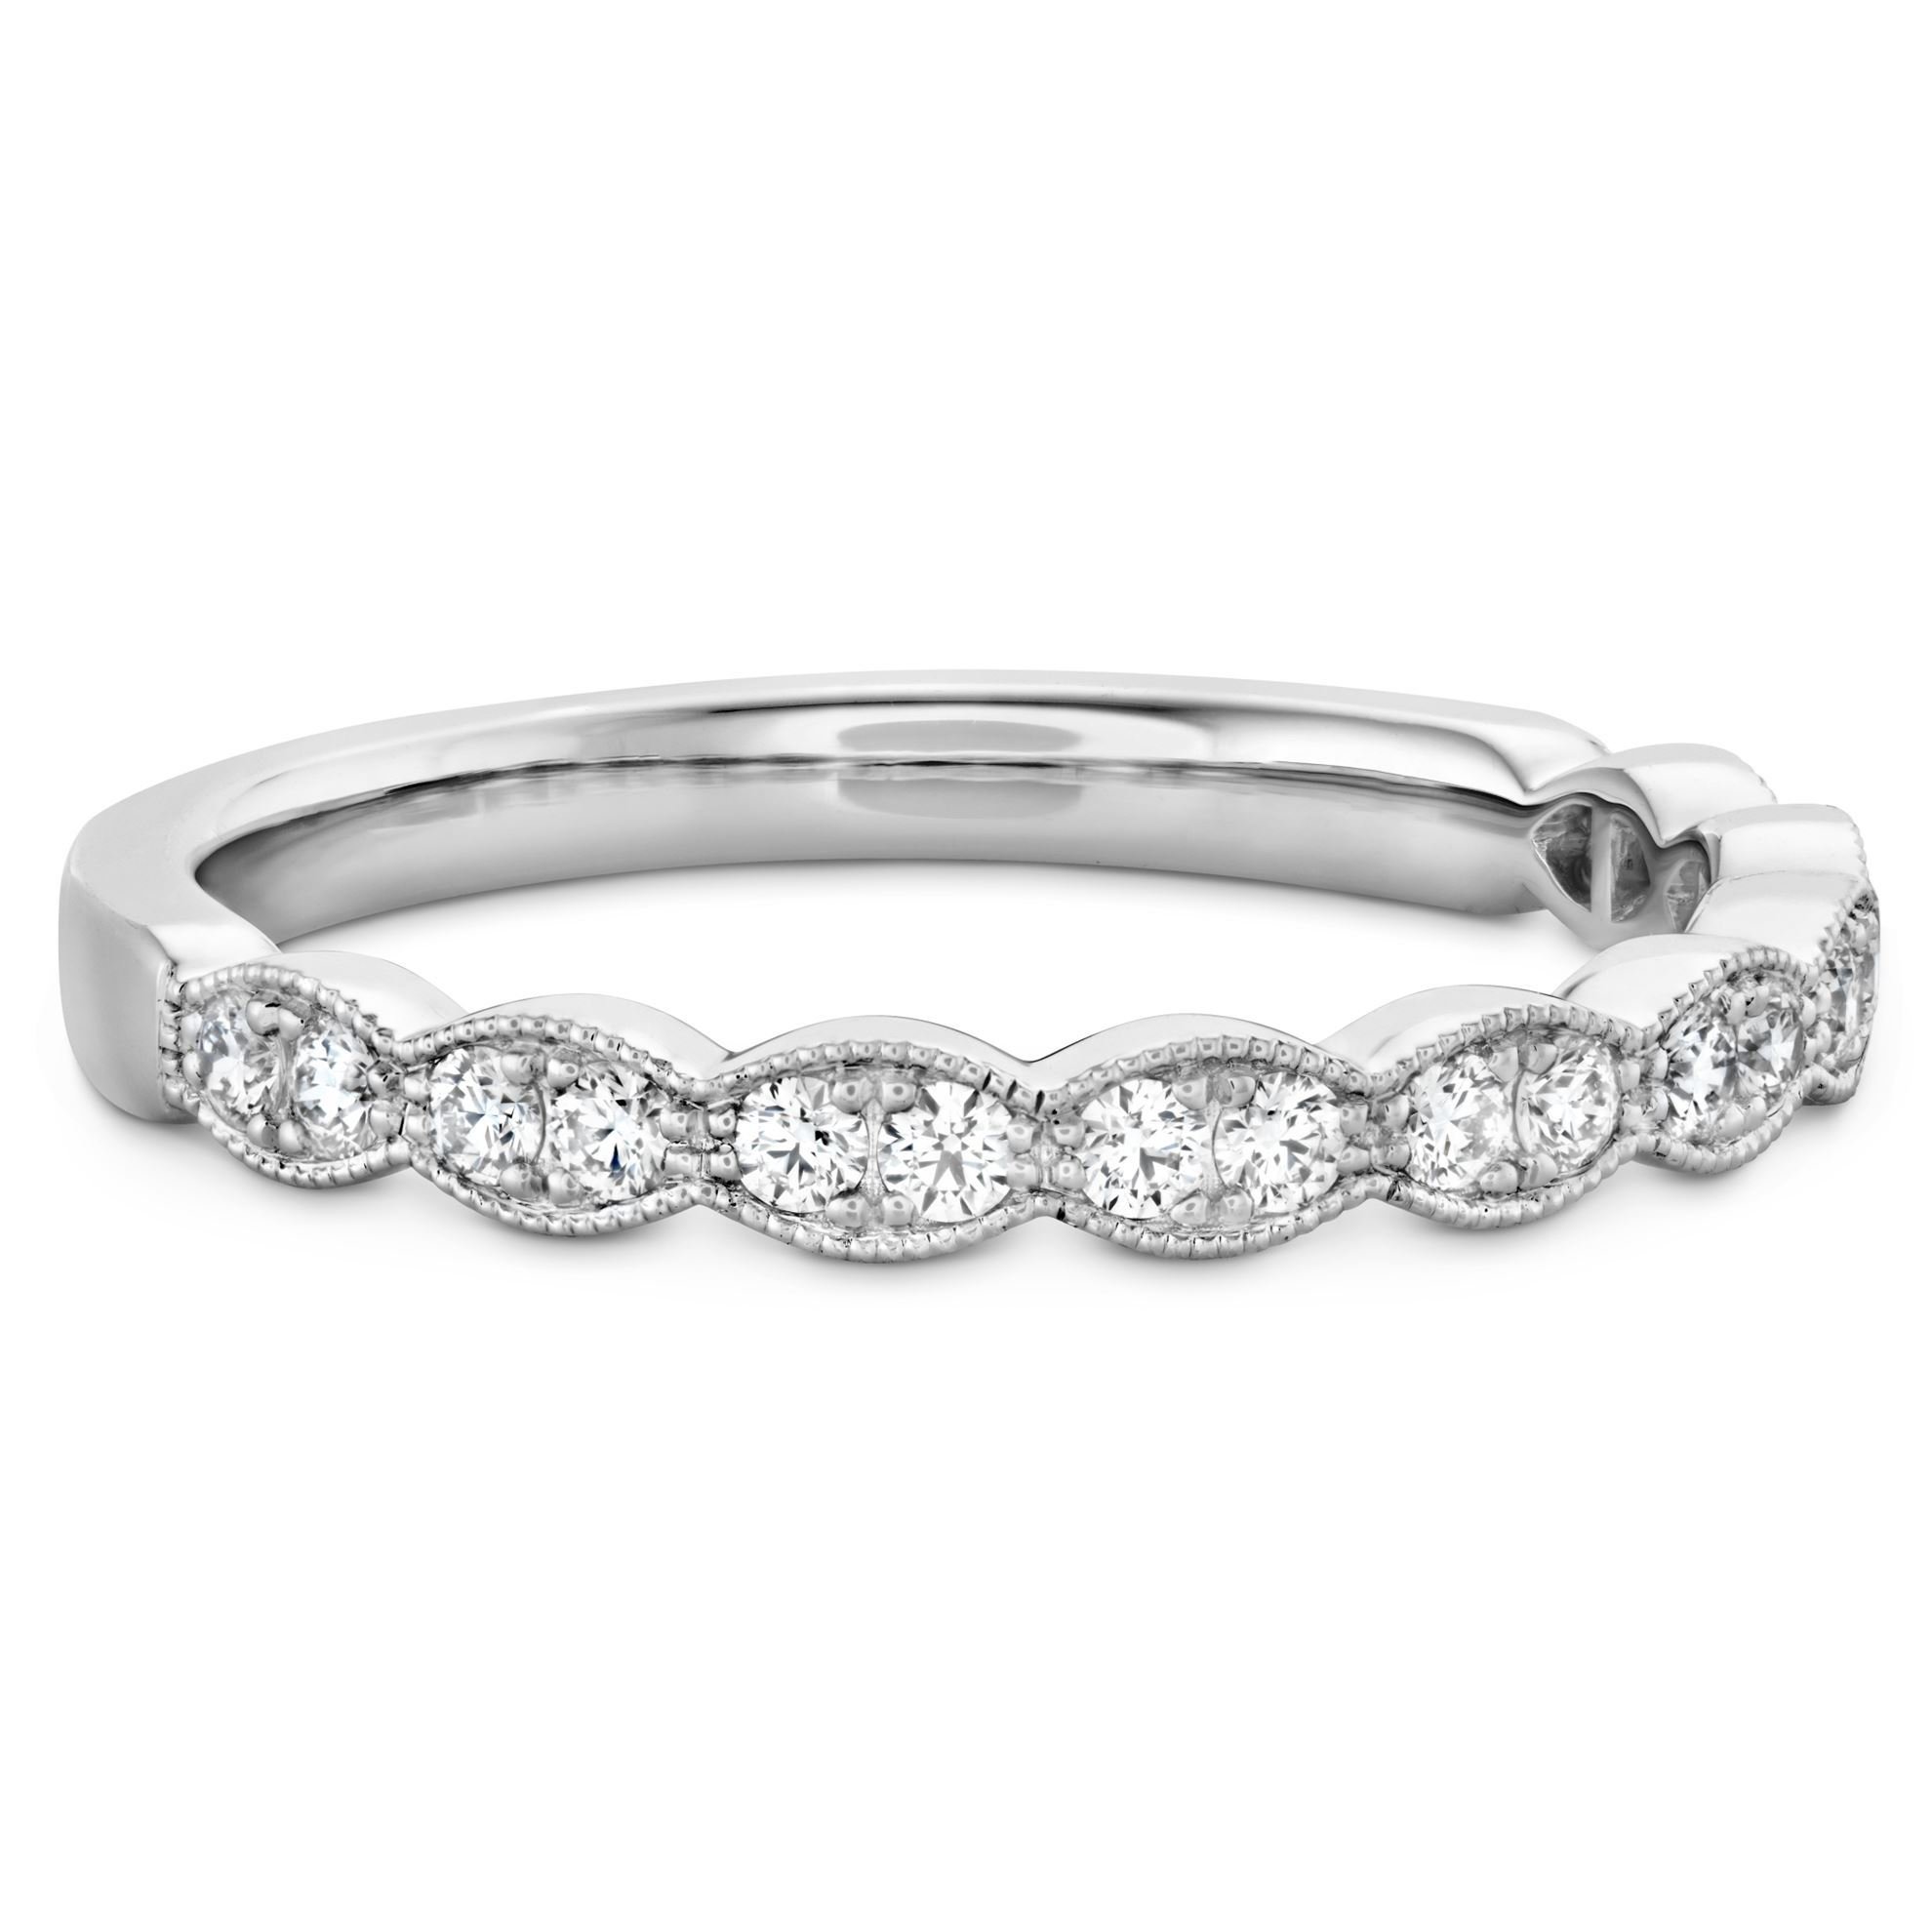 https://www.arthursjewelers.com/content/images/thumbs/Original/lorelei-floral-milgrain-diamond-band_1-179452591.jpeg